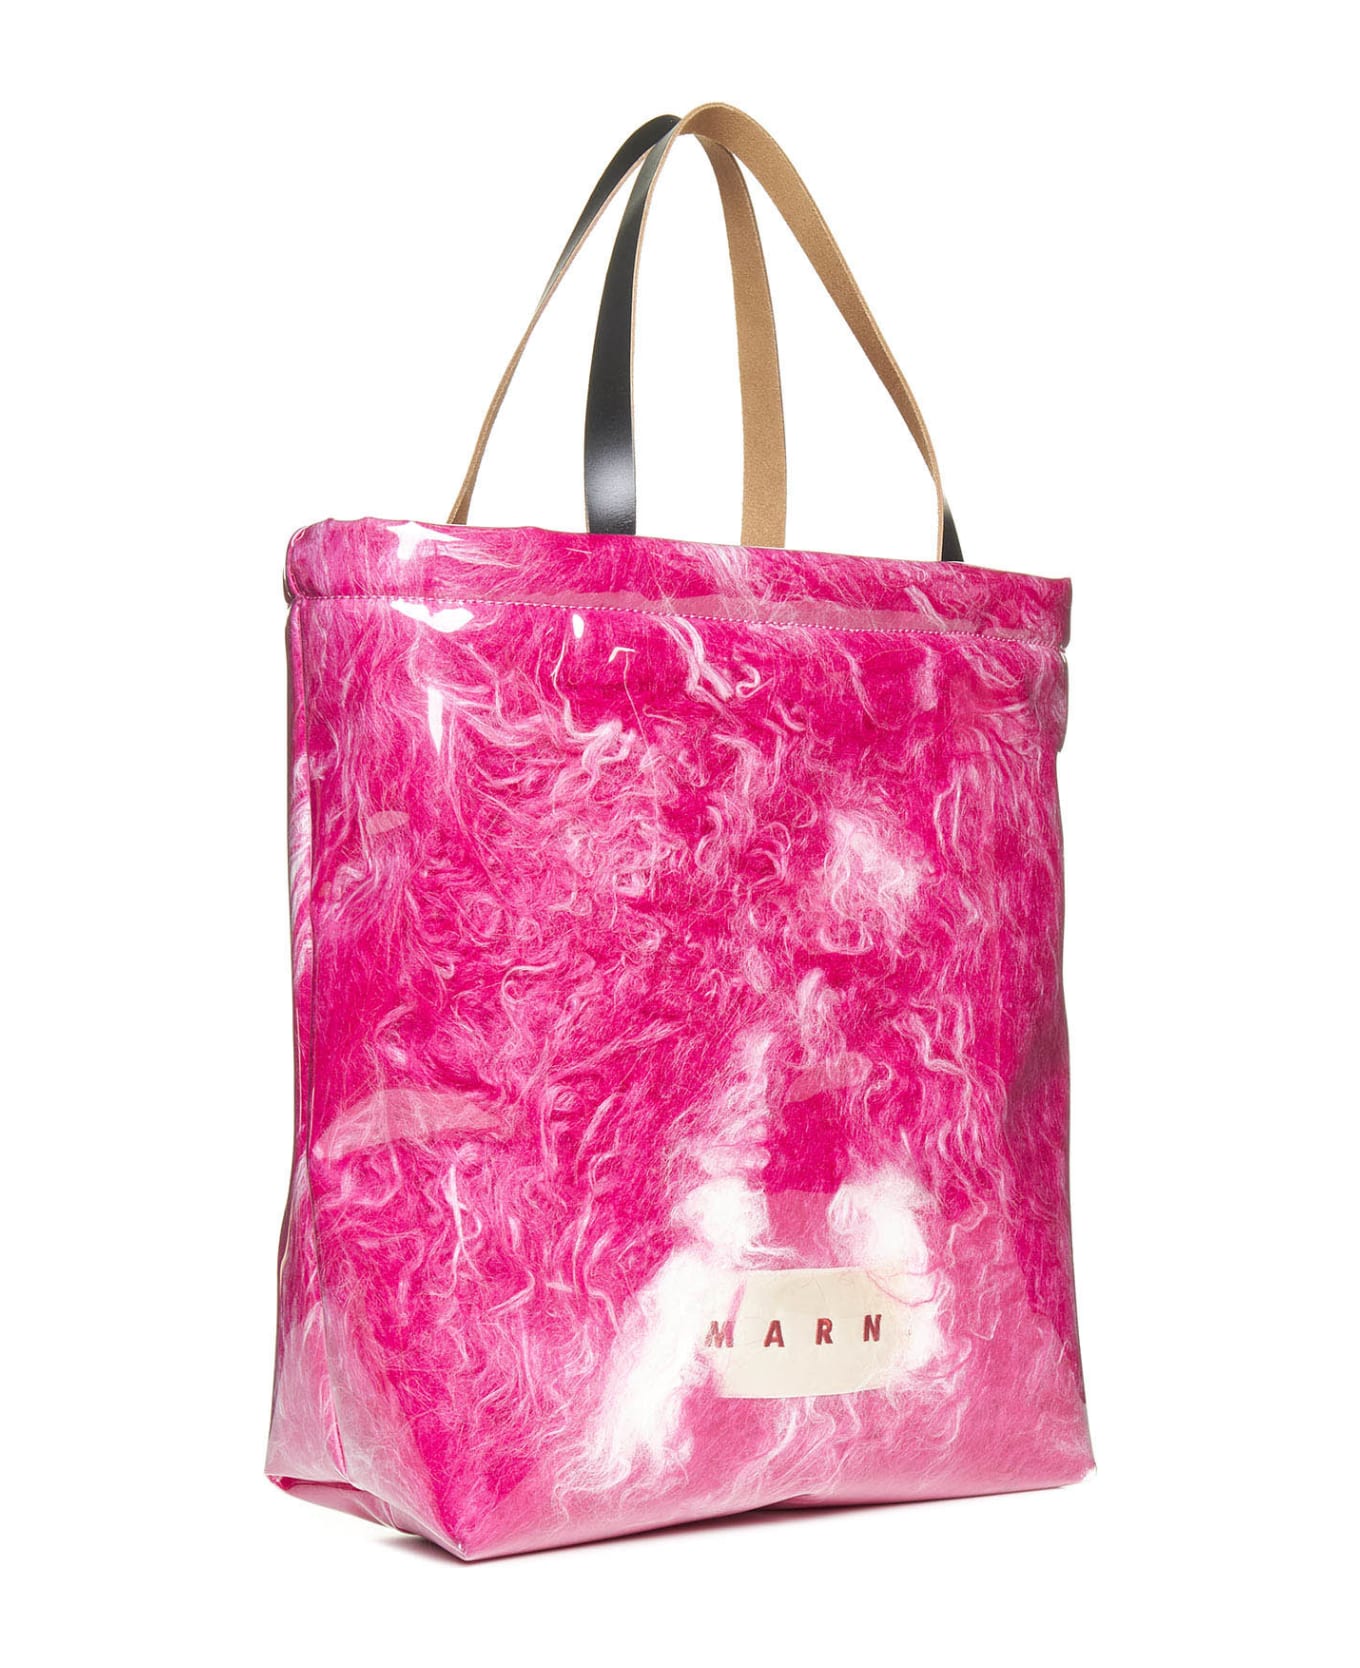 Marni Shoulder Bag - Fuchsia トートバッグ